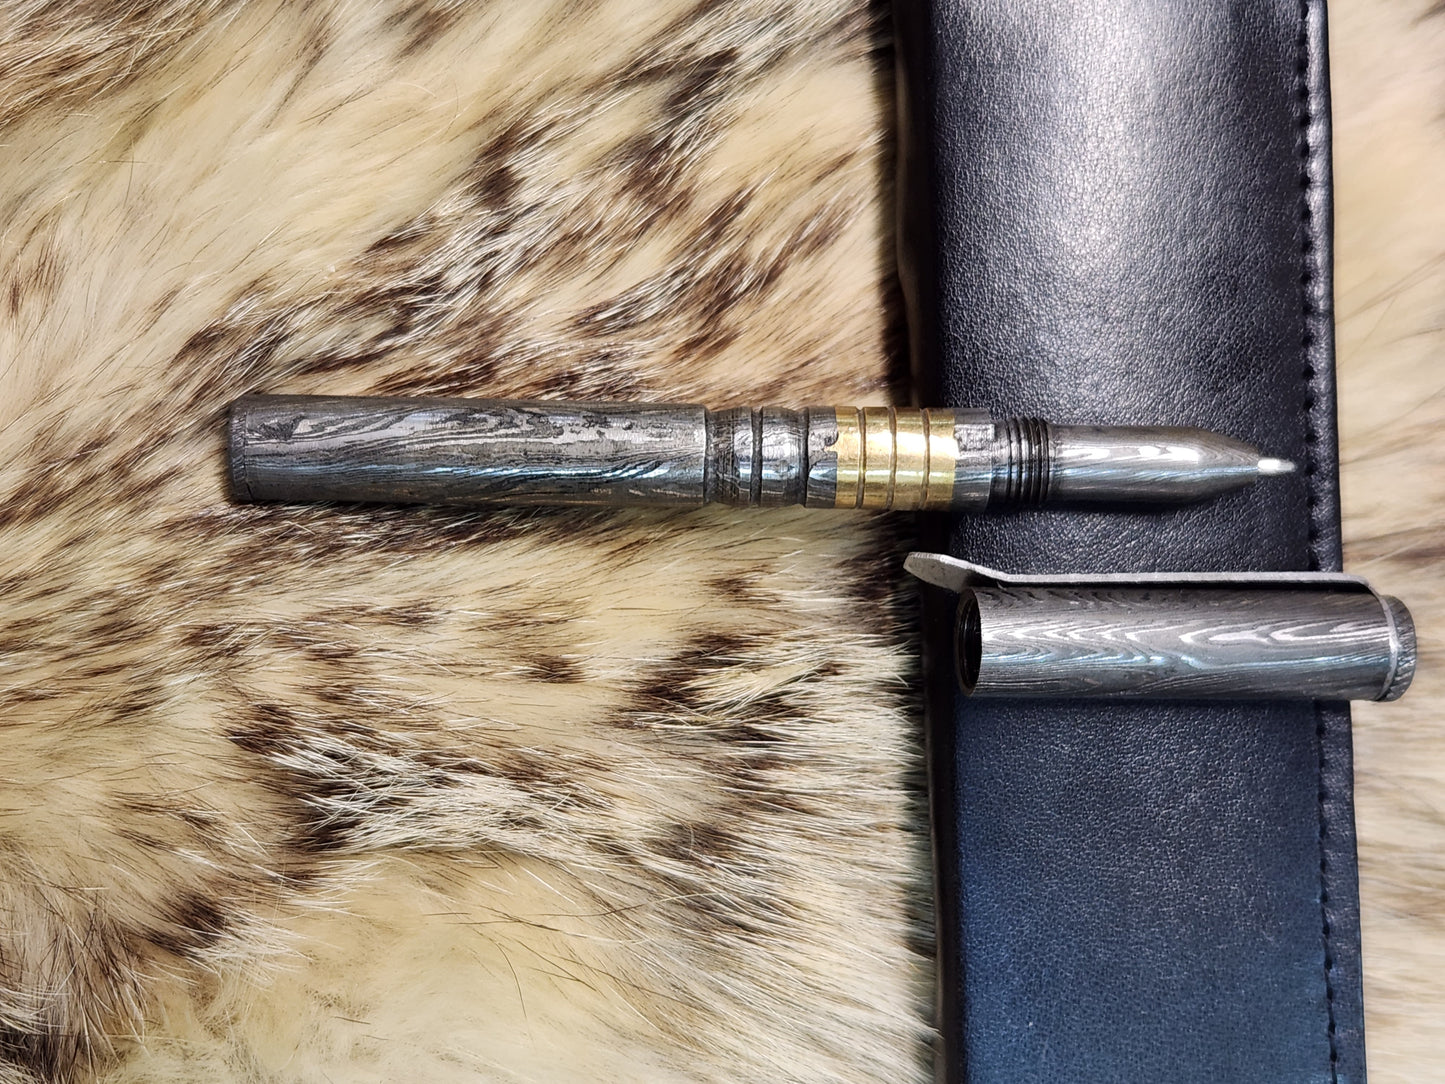 Damascus steel and brass custom pen